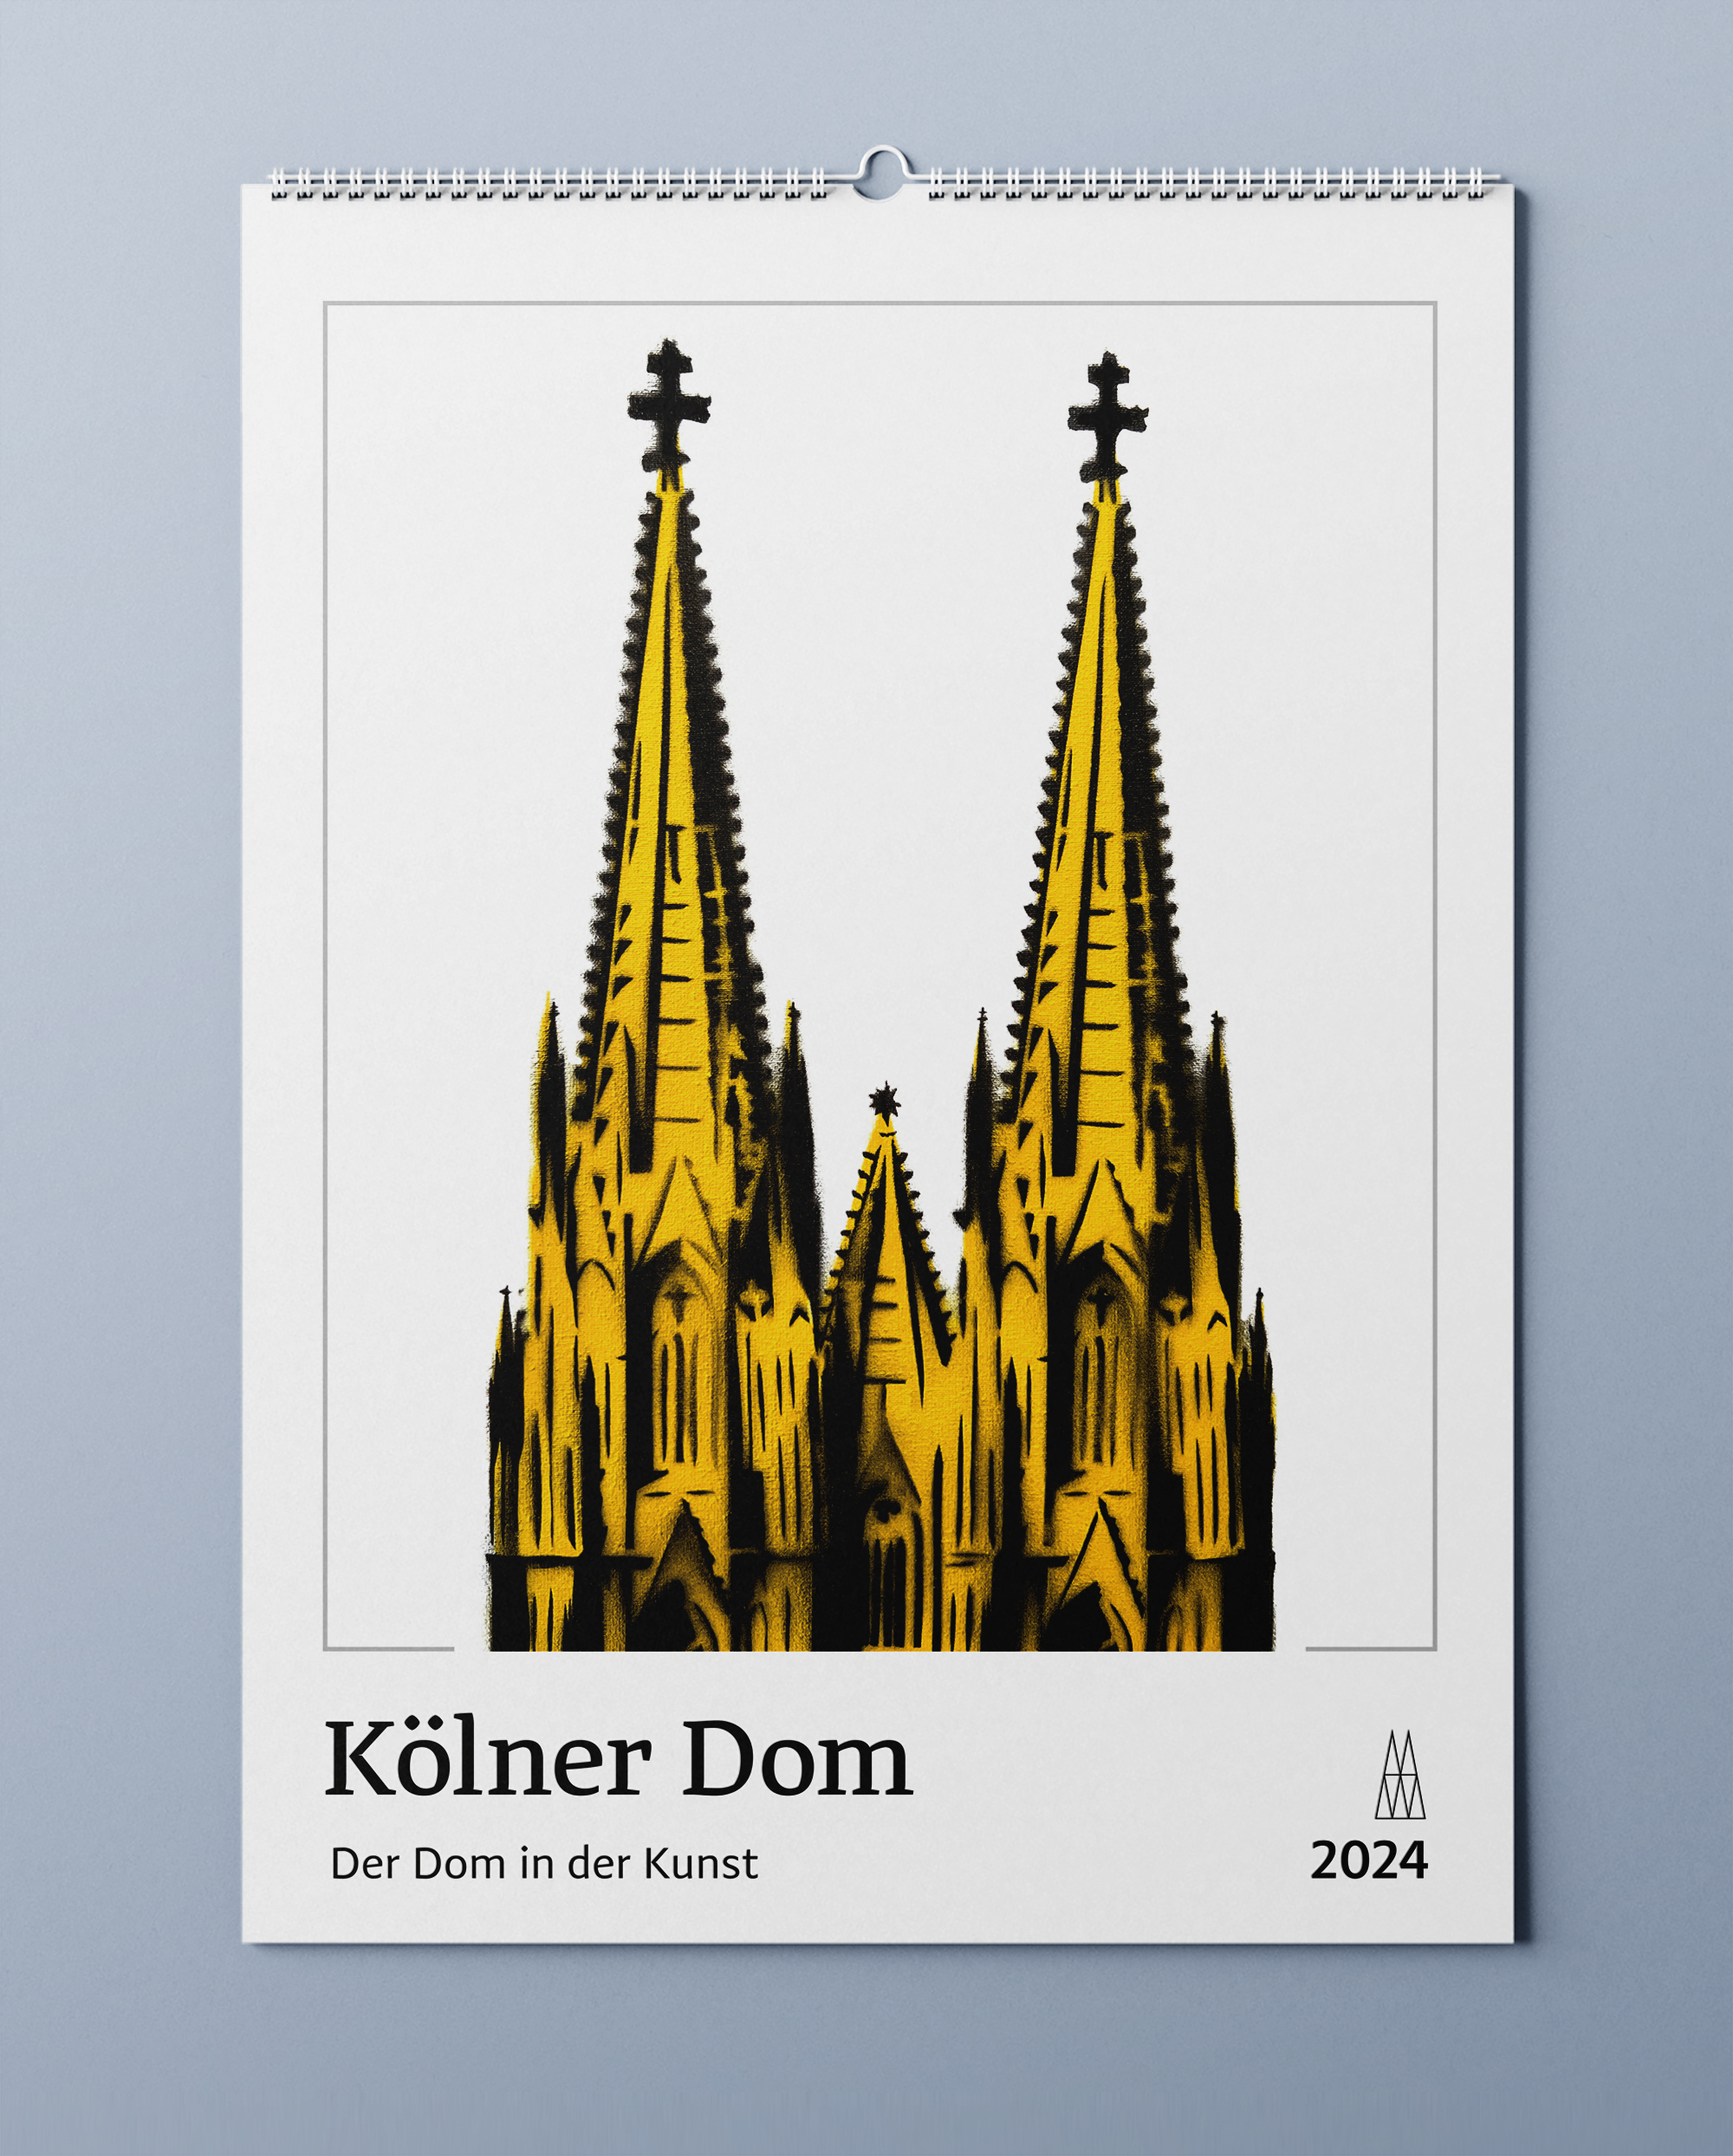 Der Kölner Domkalender 2024. © Kölner Domverlag